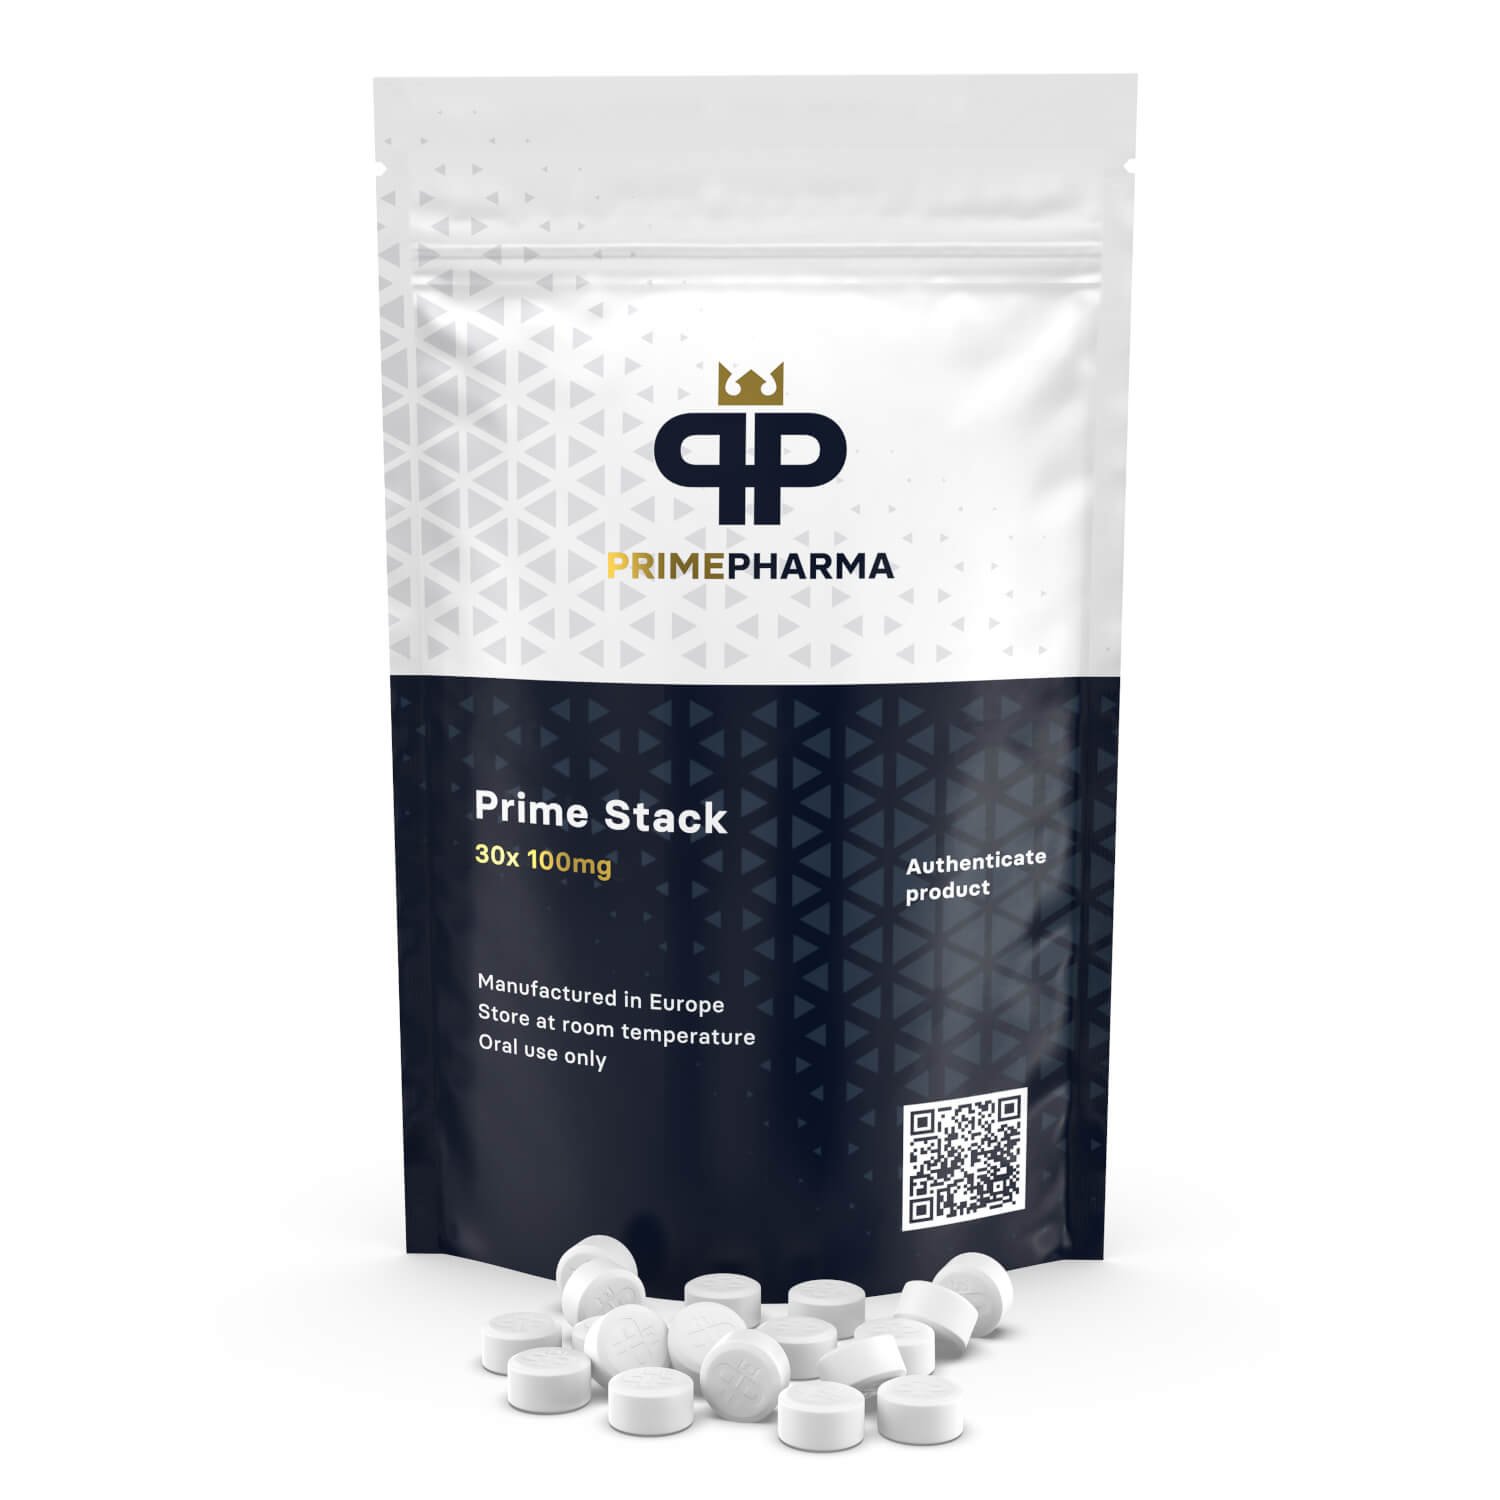 Prime-Pharma-PILA